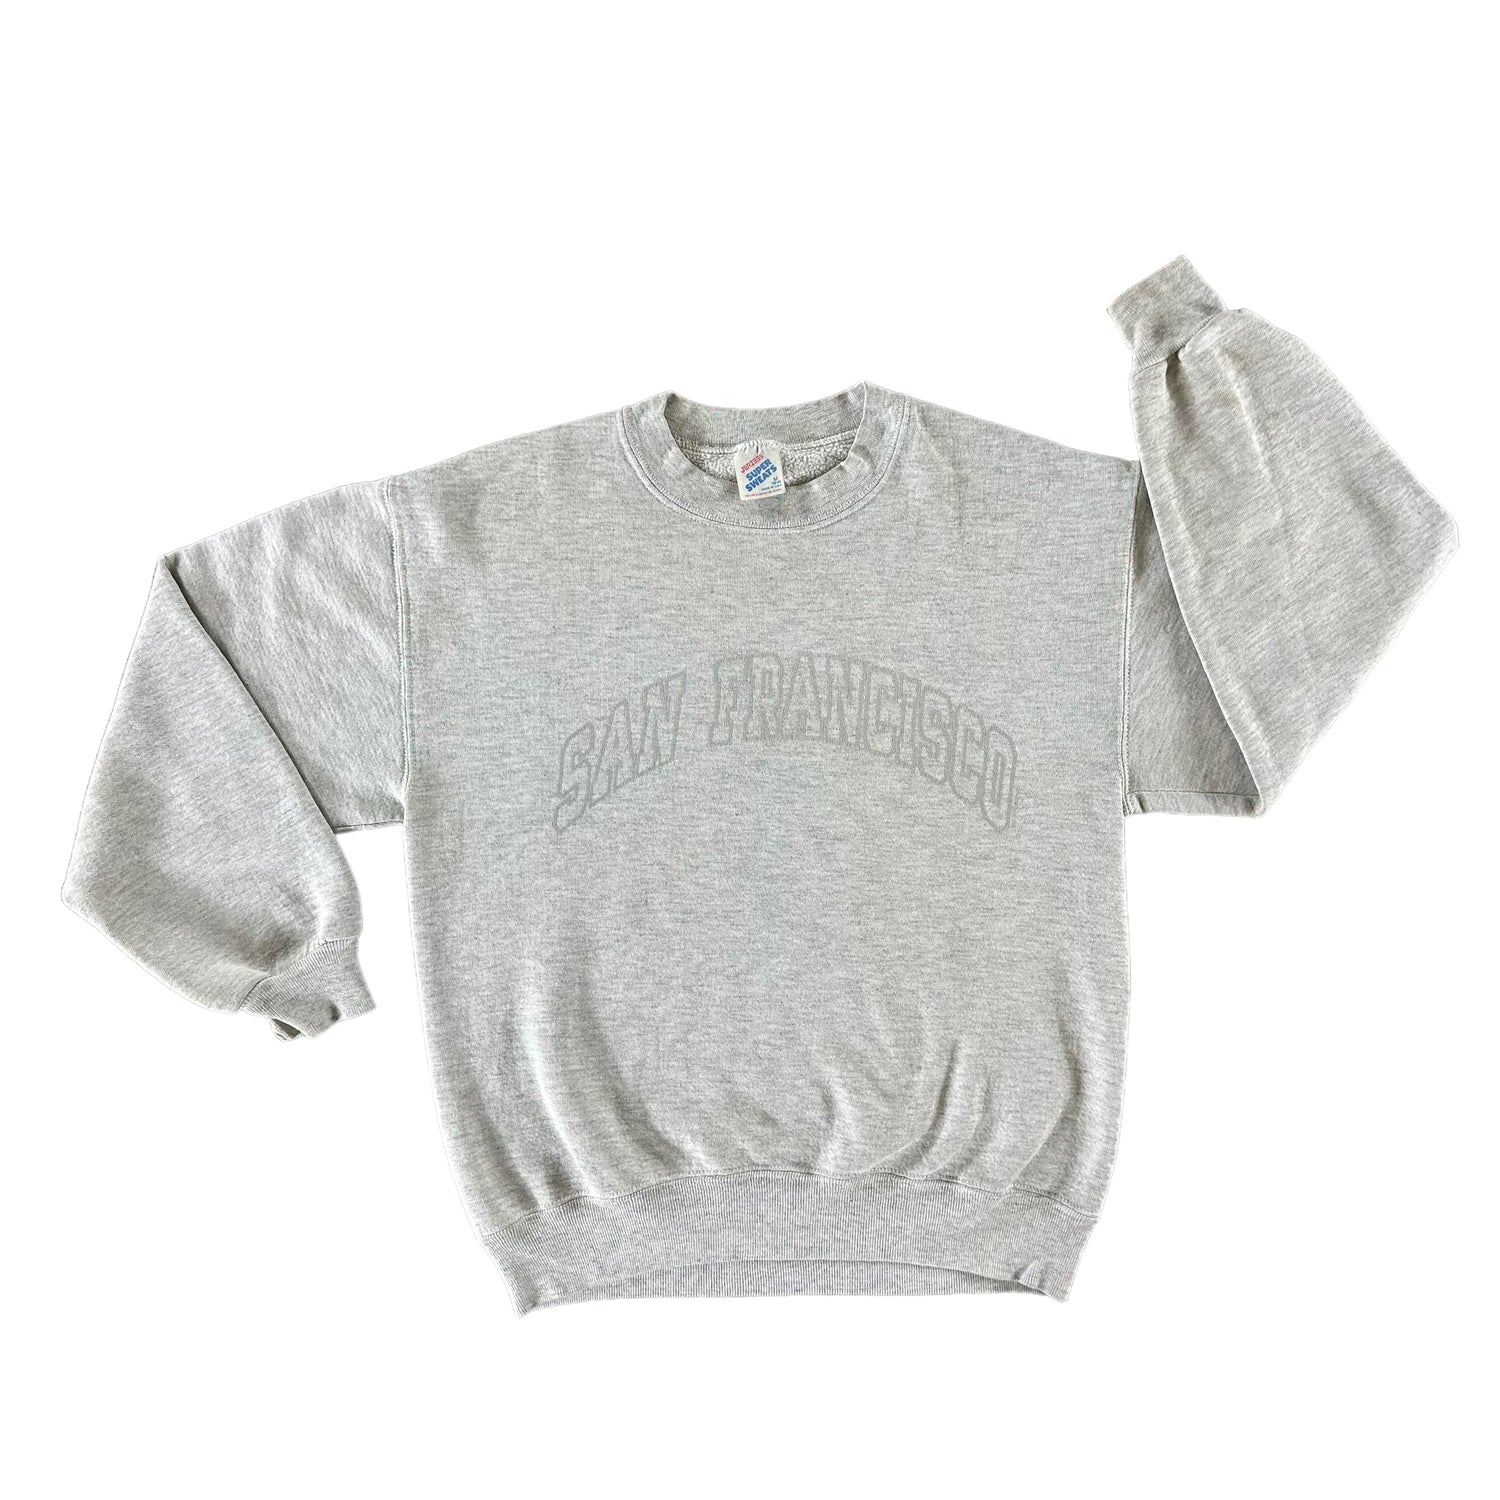 Vintage 1990s San Francisco Sweatshirt size Medium